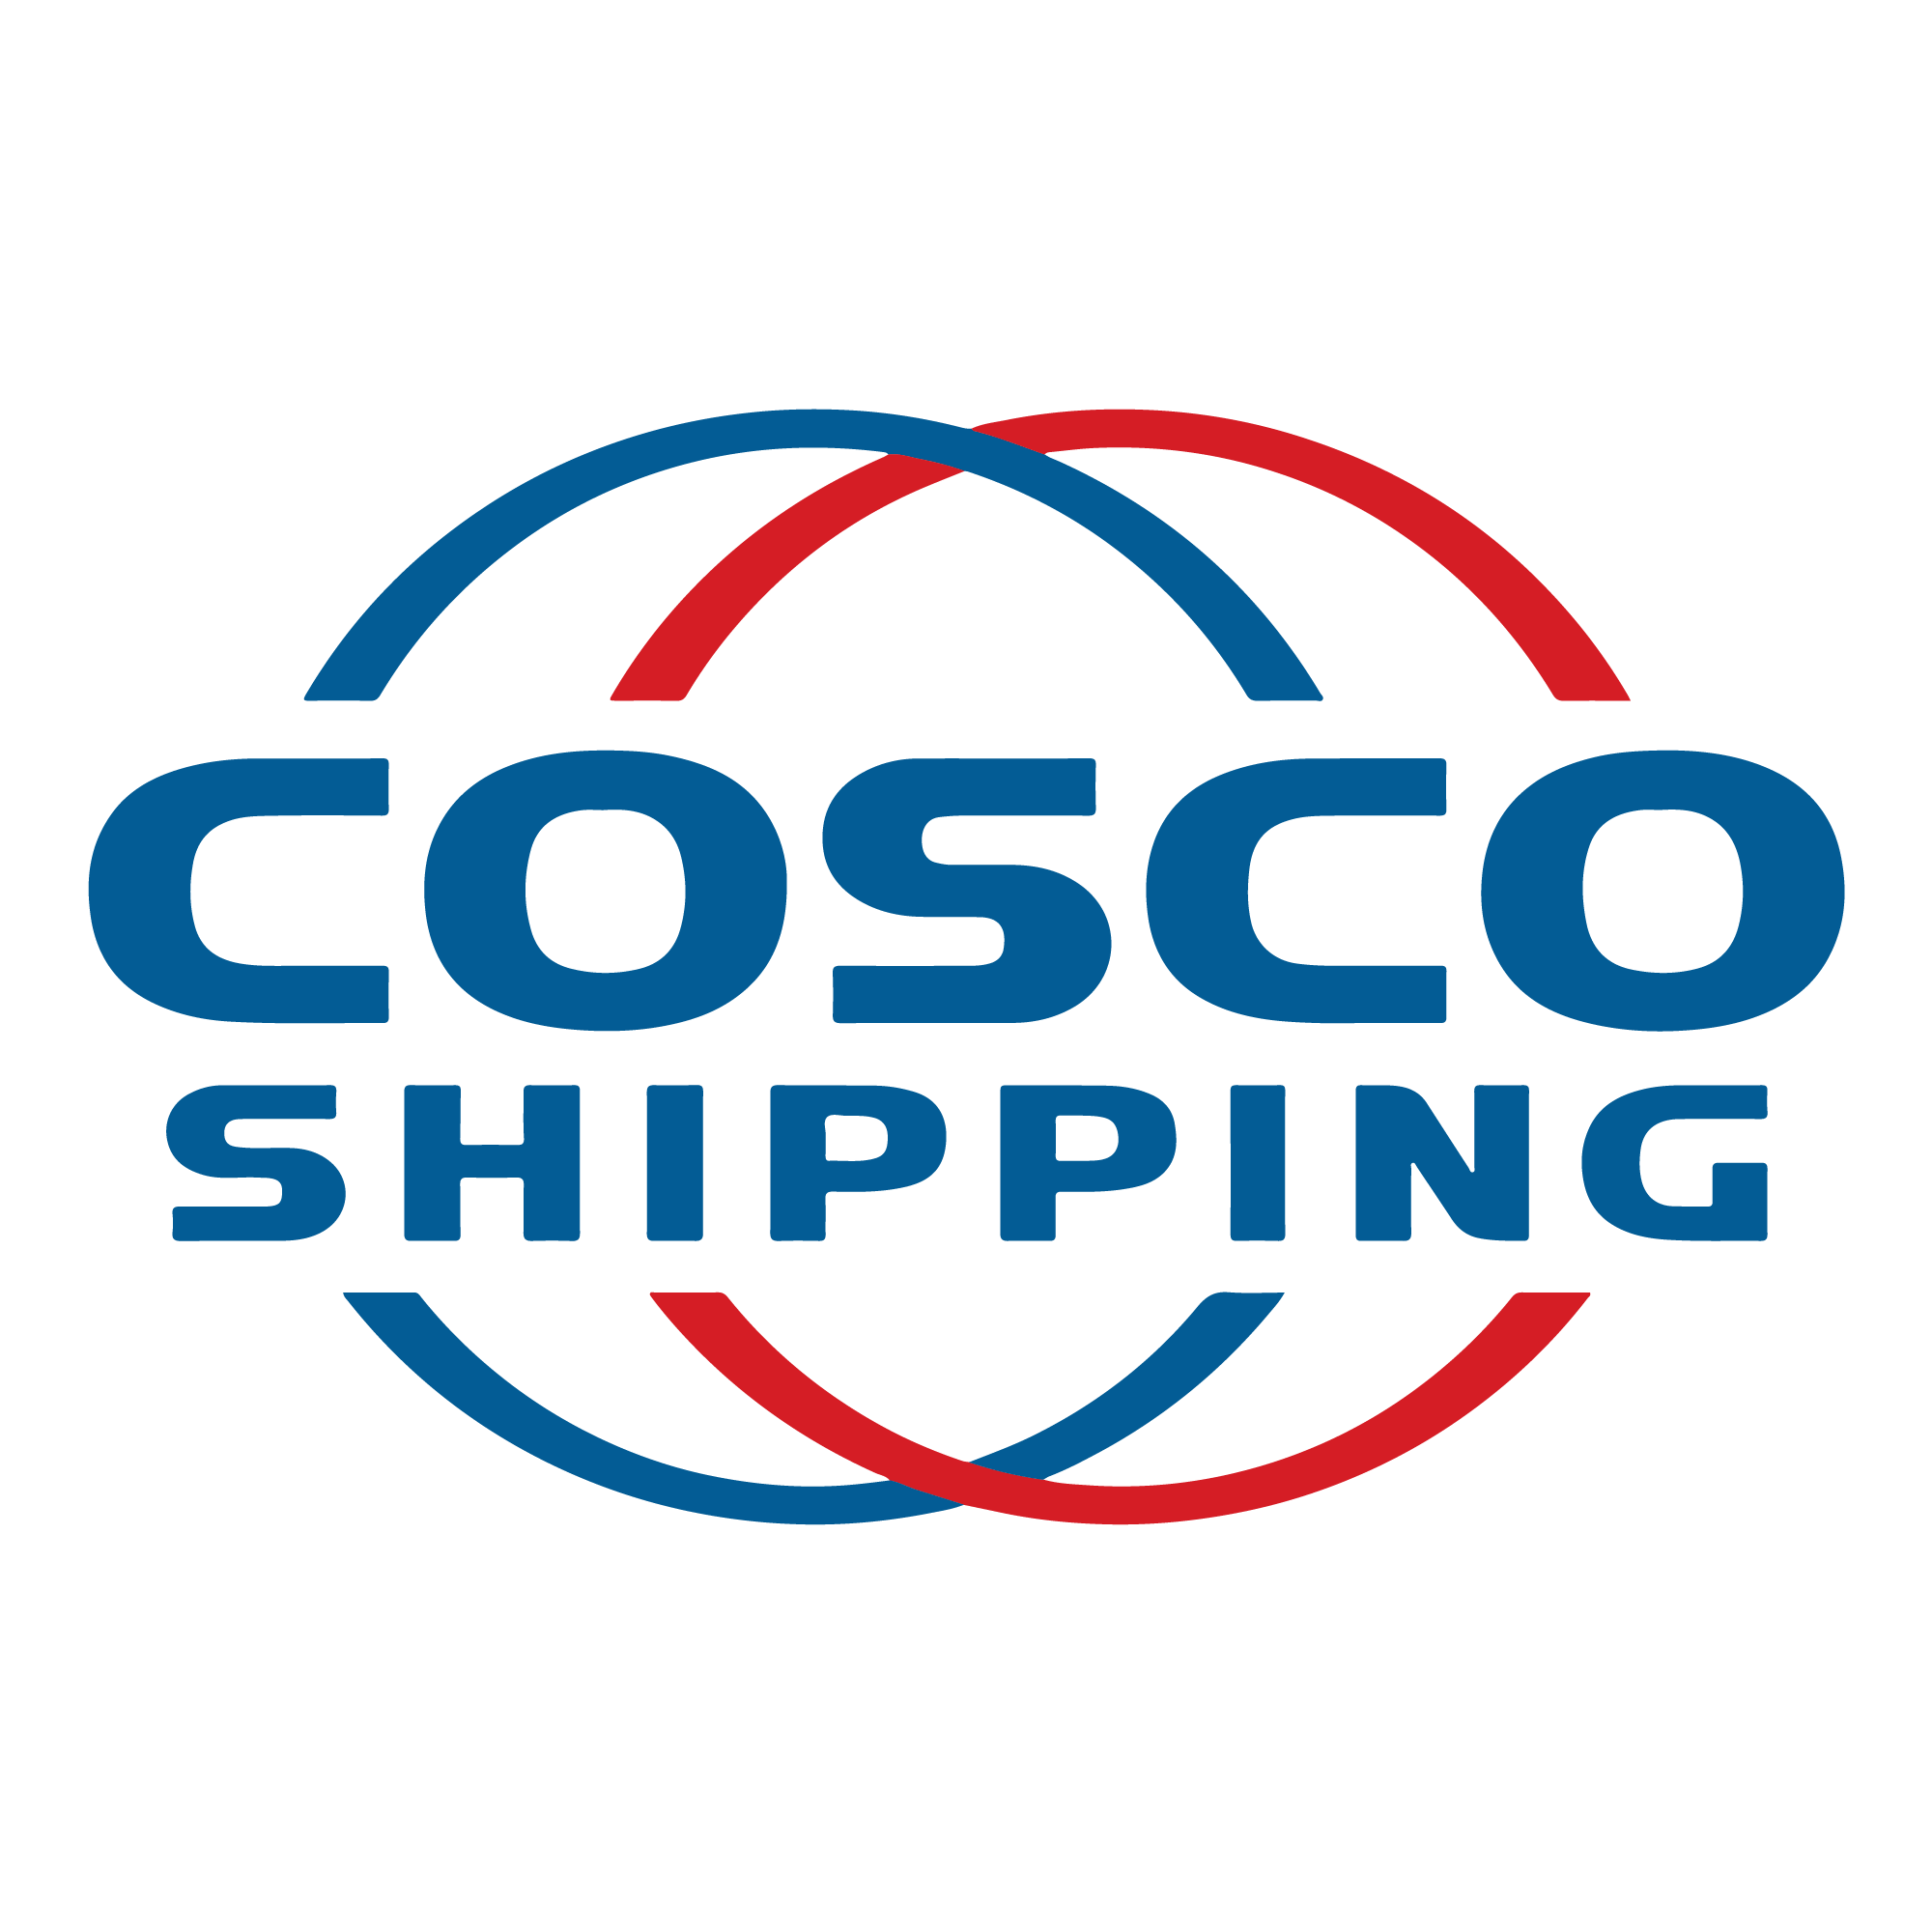 Costco Logo PNG Pic